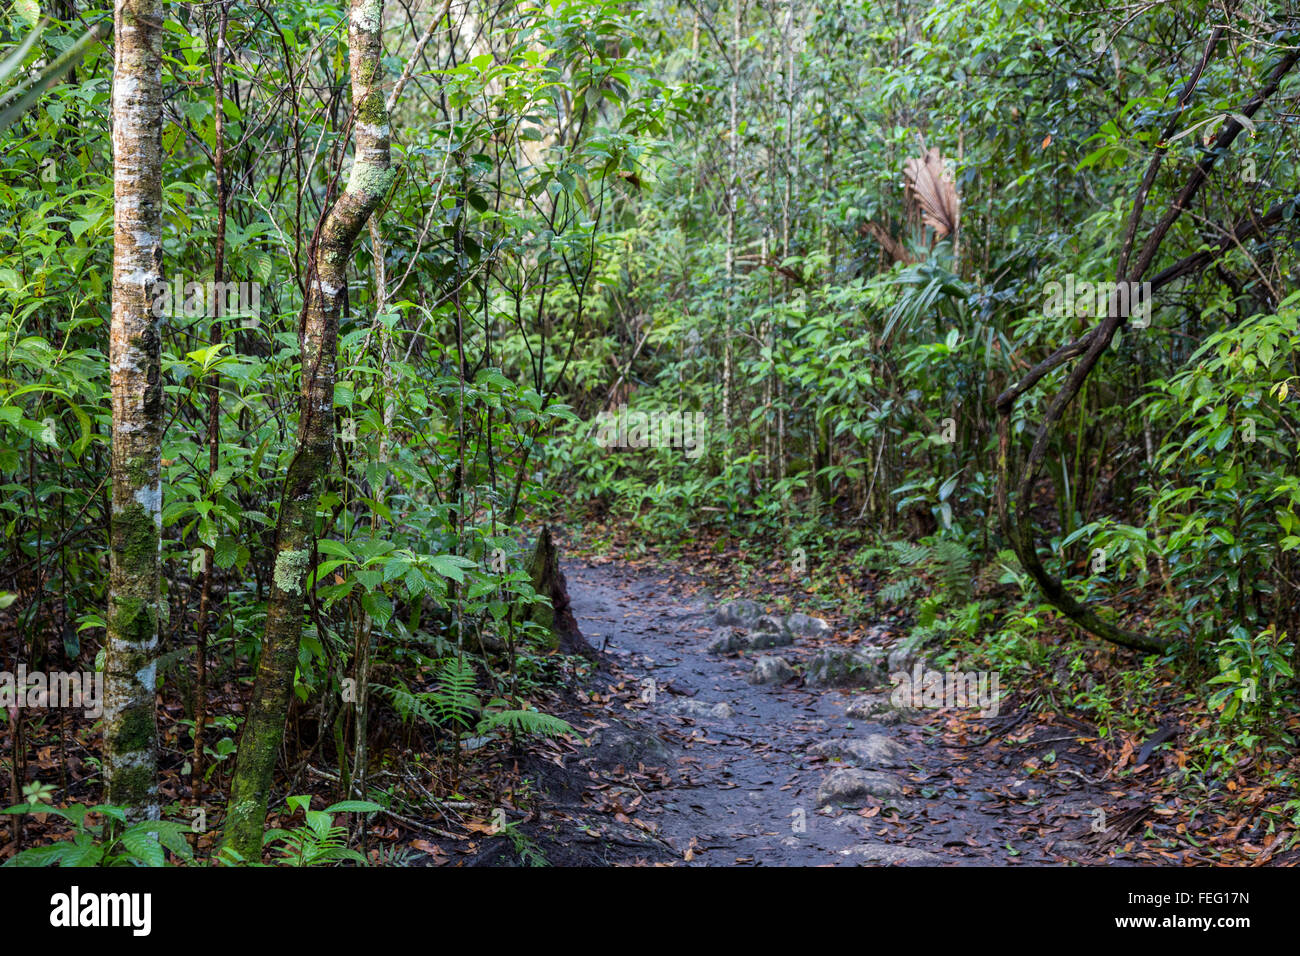 Trail through Vegetation in a Tropical Hardwood Hammock Community, southern Florida. Stock Photo